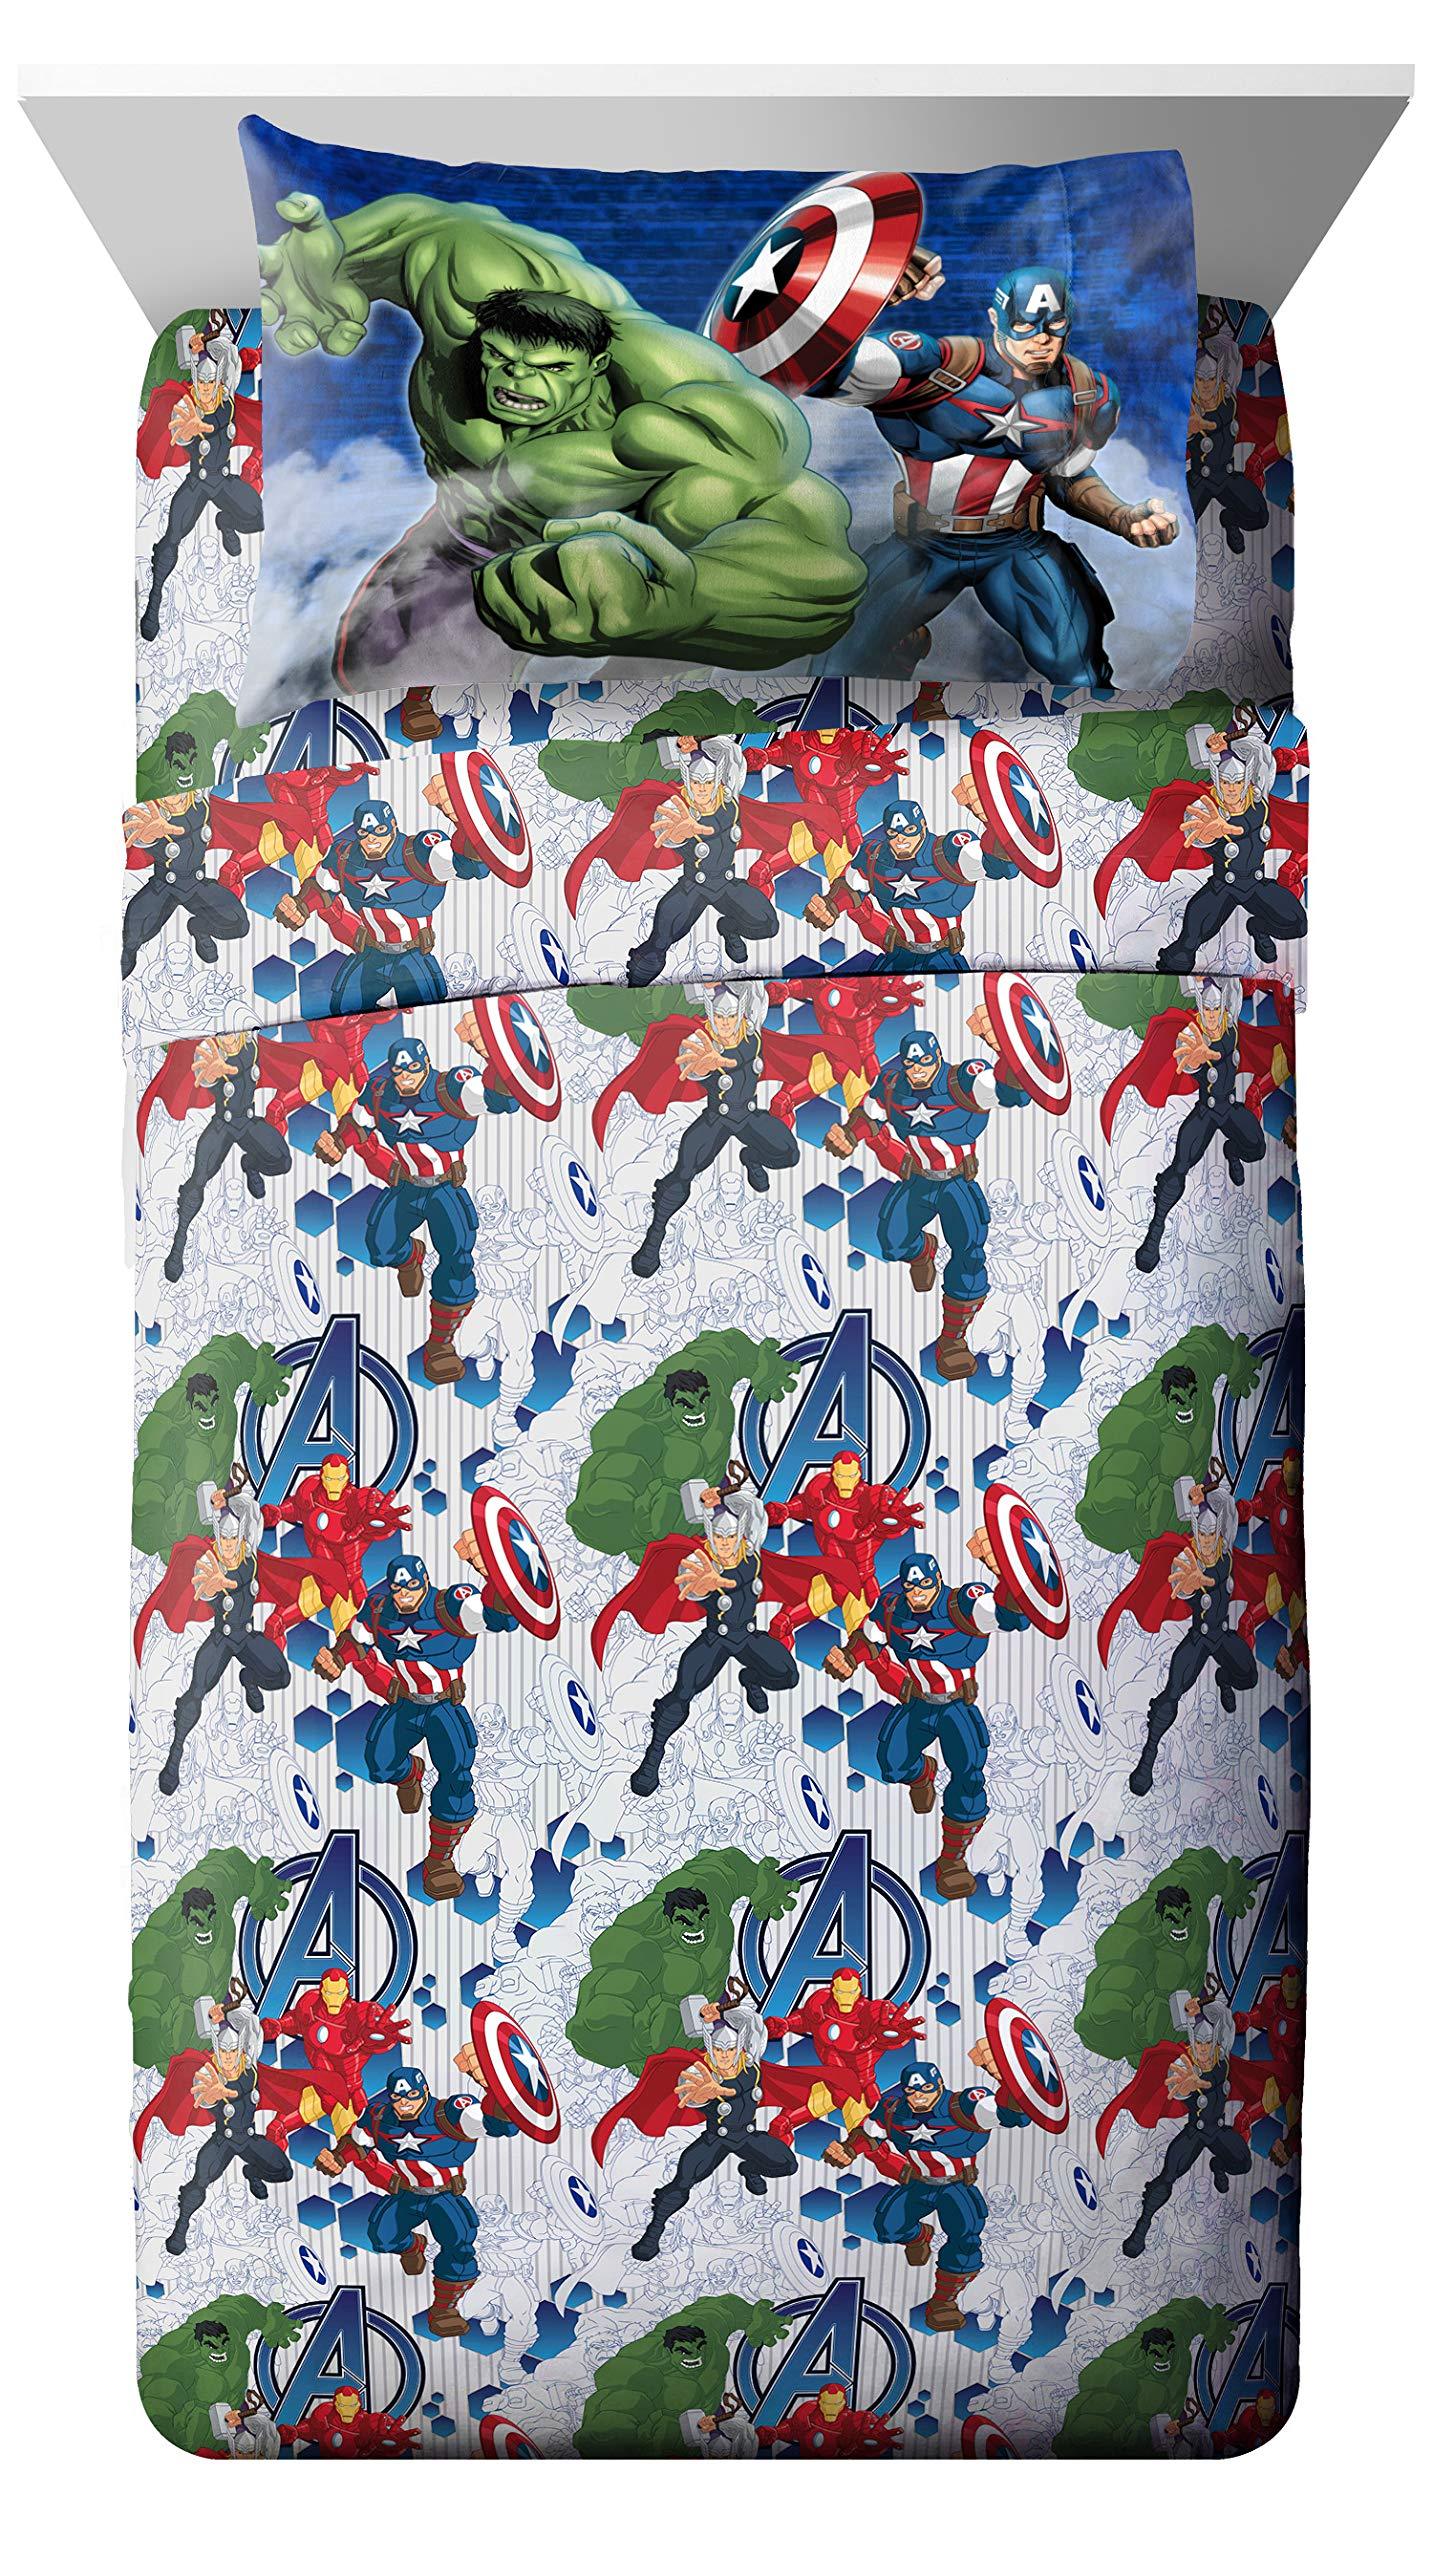 Avengers Collection Cartoon Superhero 5 Pieces Kids Full Bed Set, 100% Microfiber, Blue, Marvel